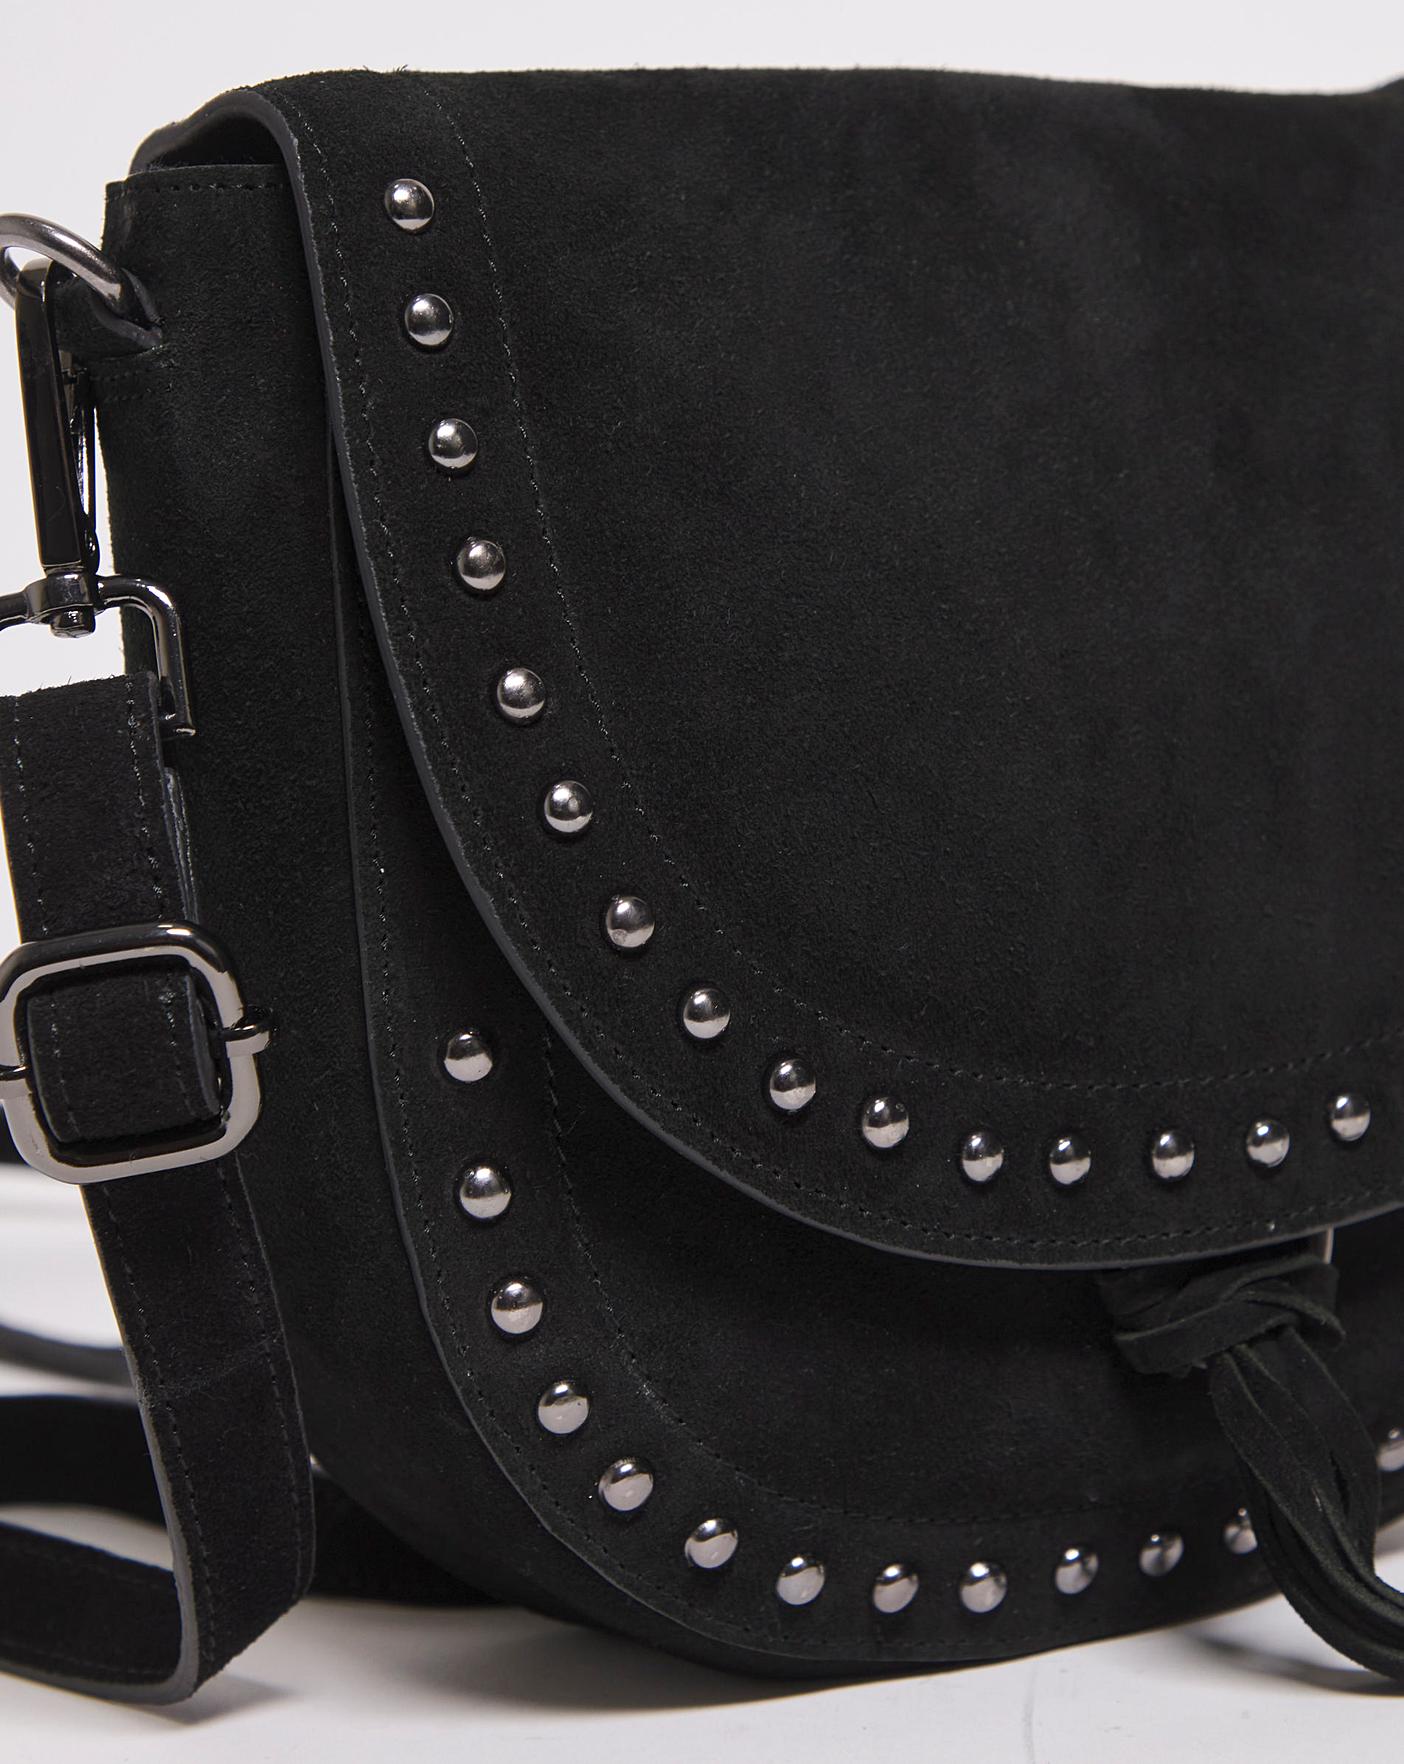 Gianni Versace Lasercut Studded Handbag